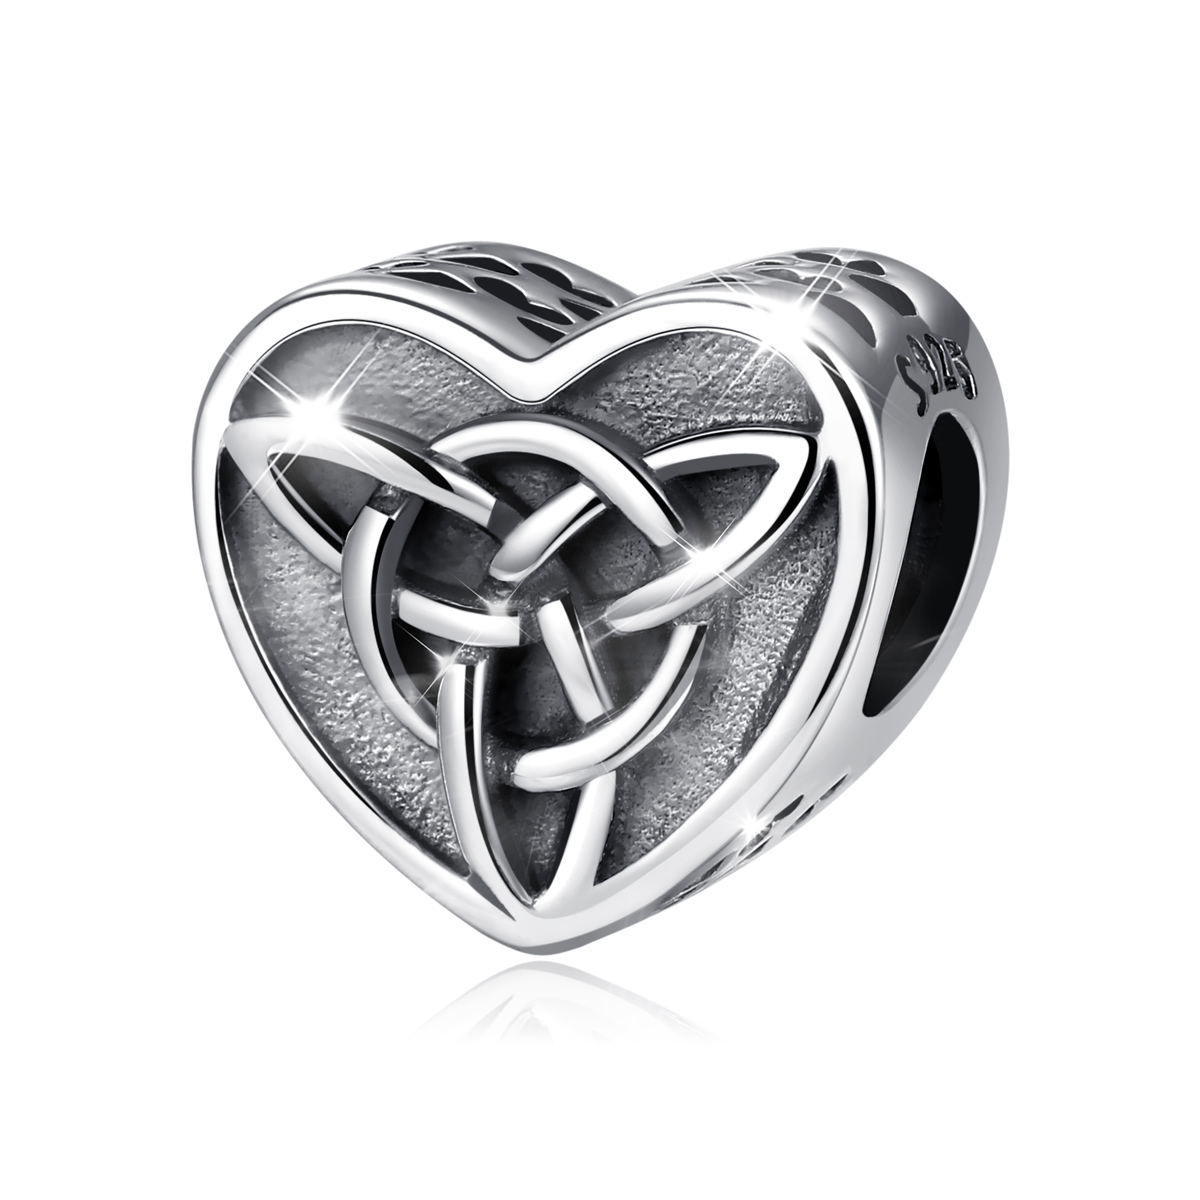 Merryshine Fine Jewelry 925 Sterling Silver Heart-shaped Vintage Celtic Knot Pattern Beads for Bracelets DIY